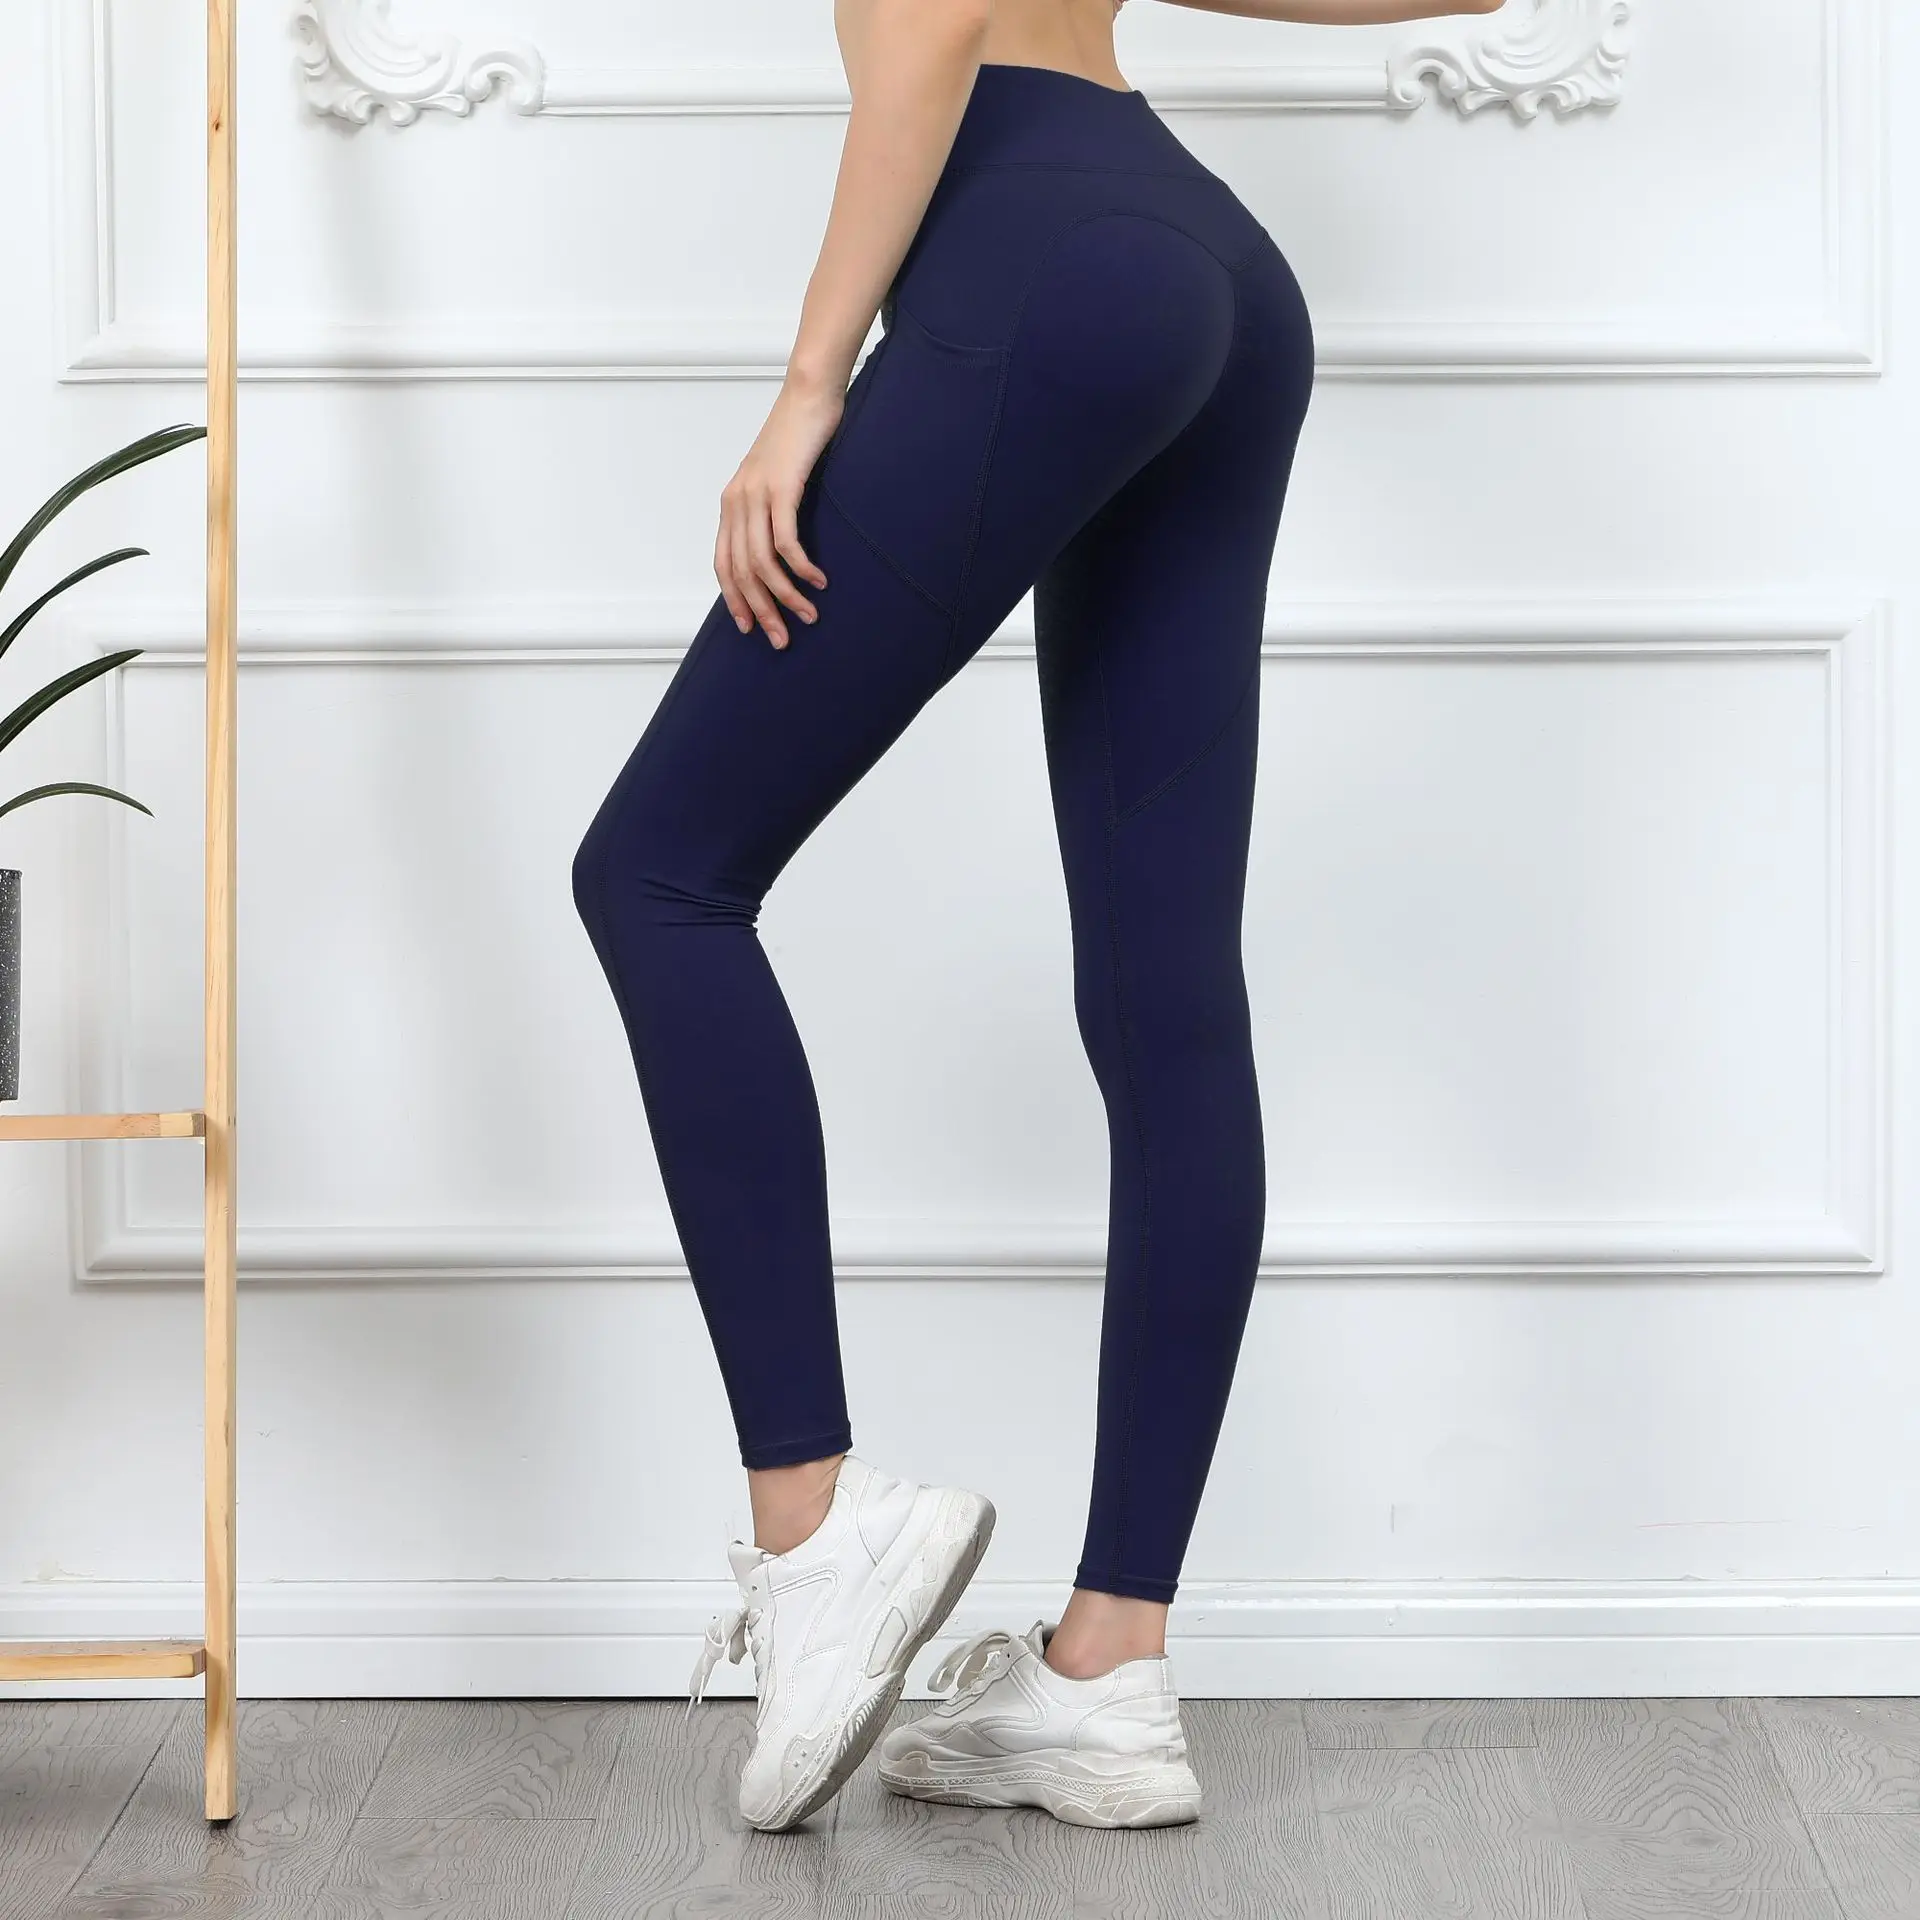 Sports tights 2020 new running training quick-drying elastic high waist yoga pants for women sport seamless leggings